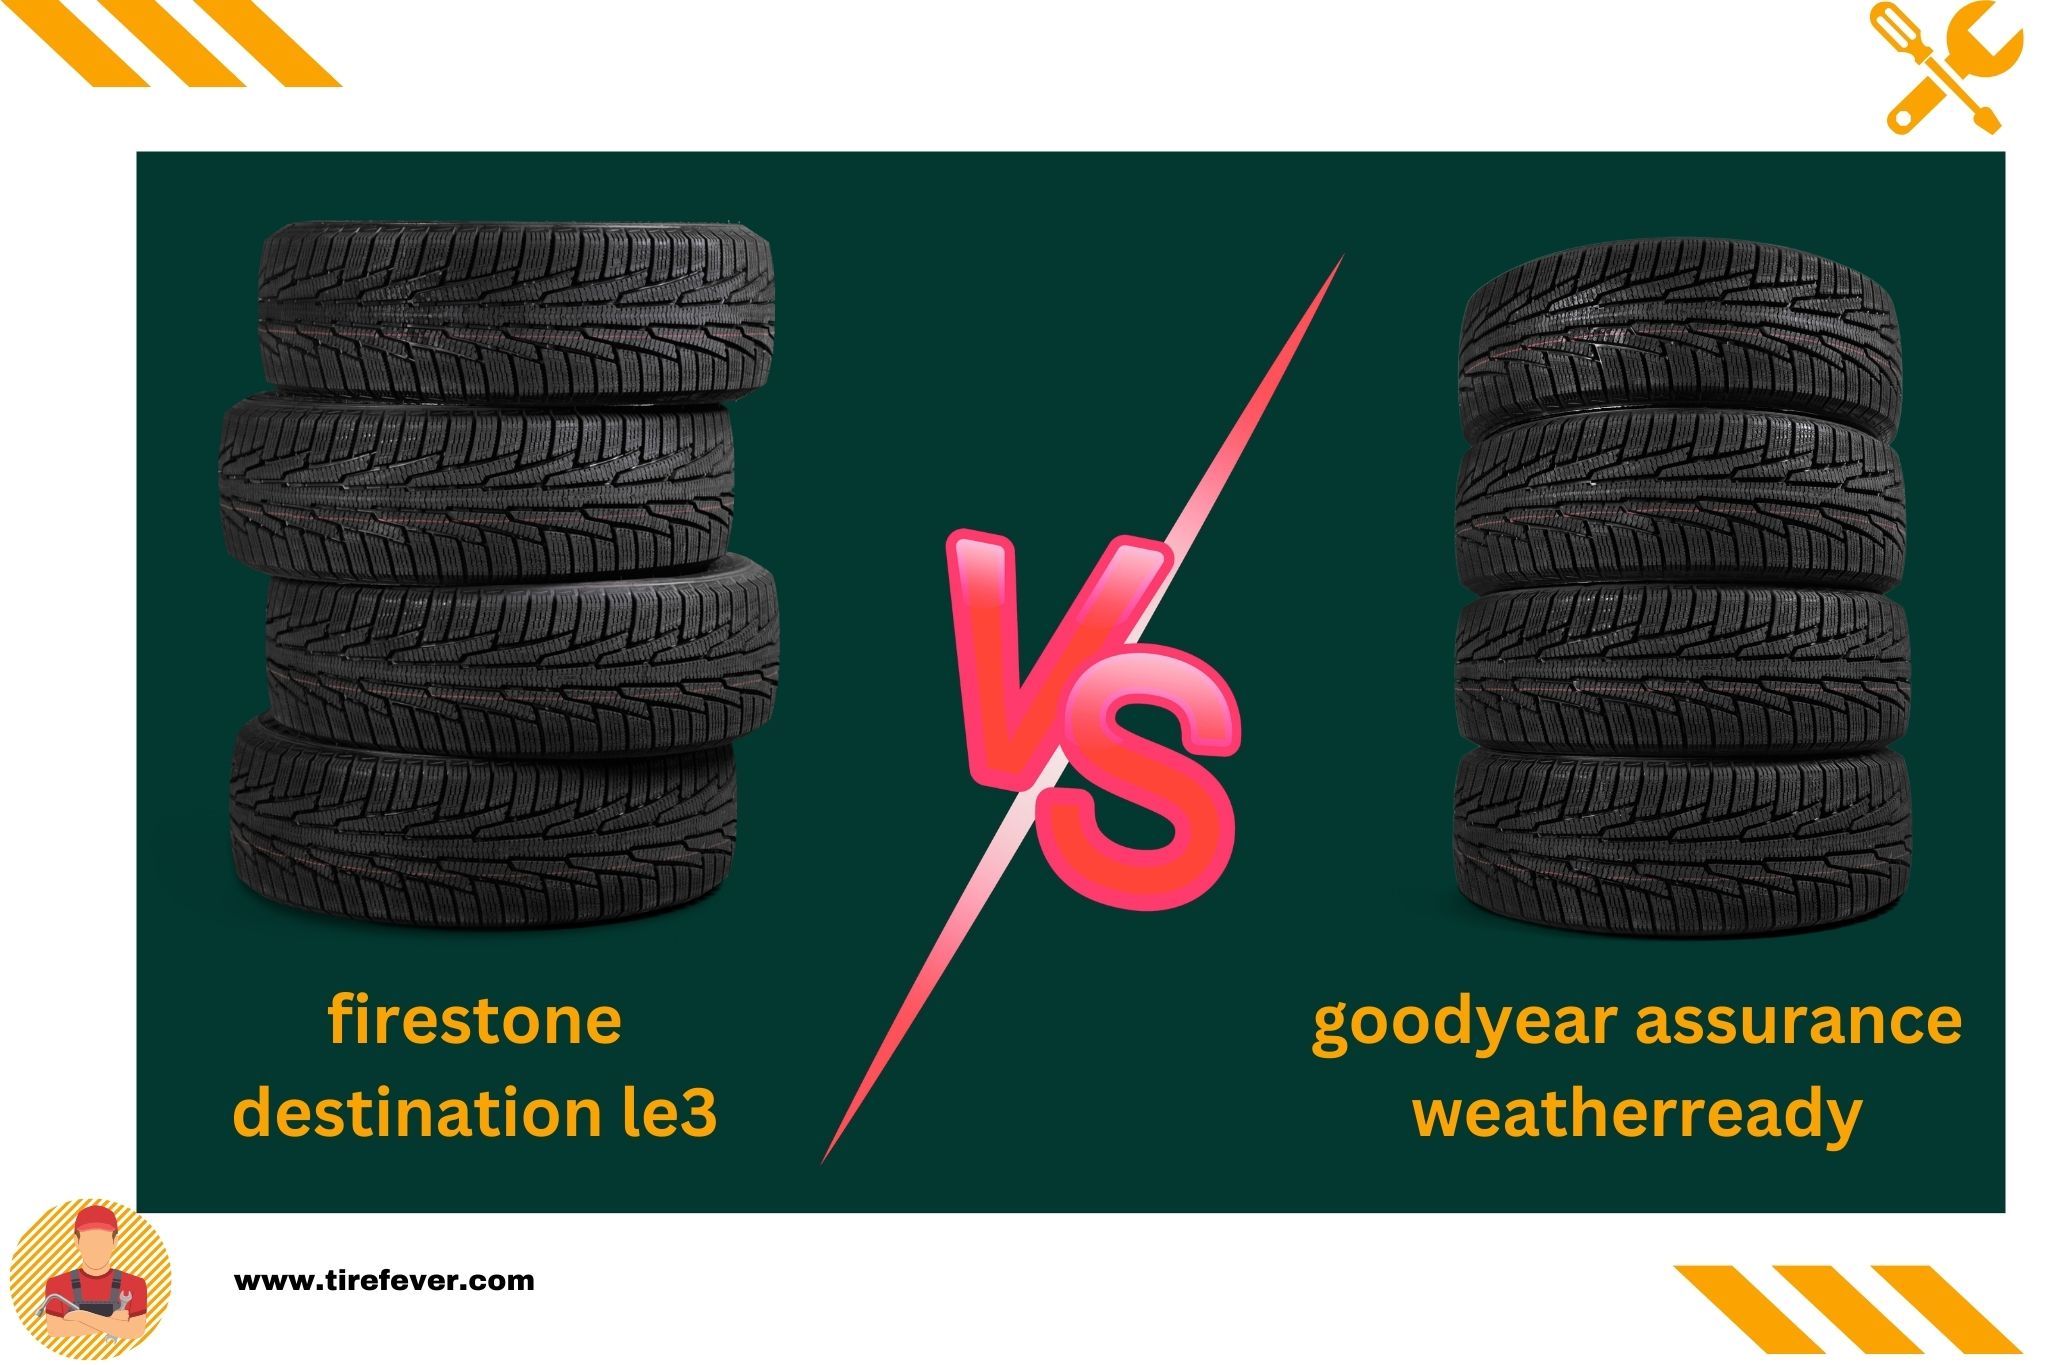 firestone destination le3 vs goodyear assurance weatherready